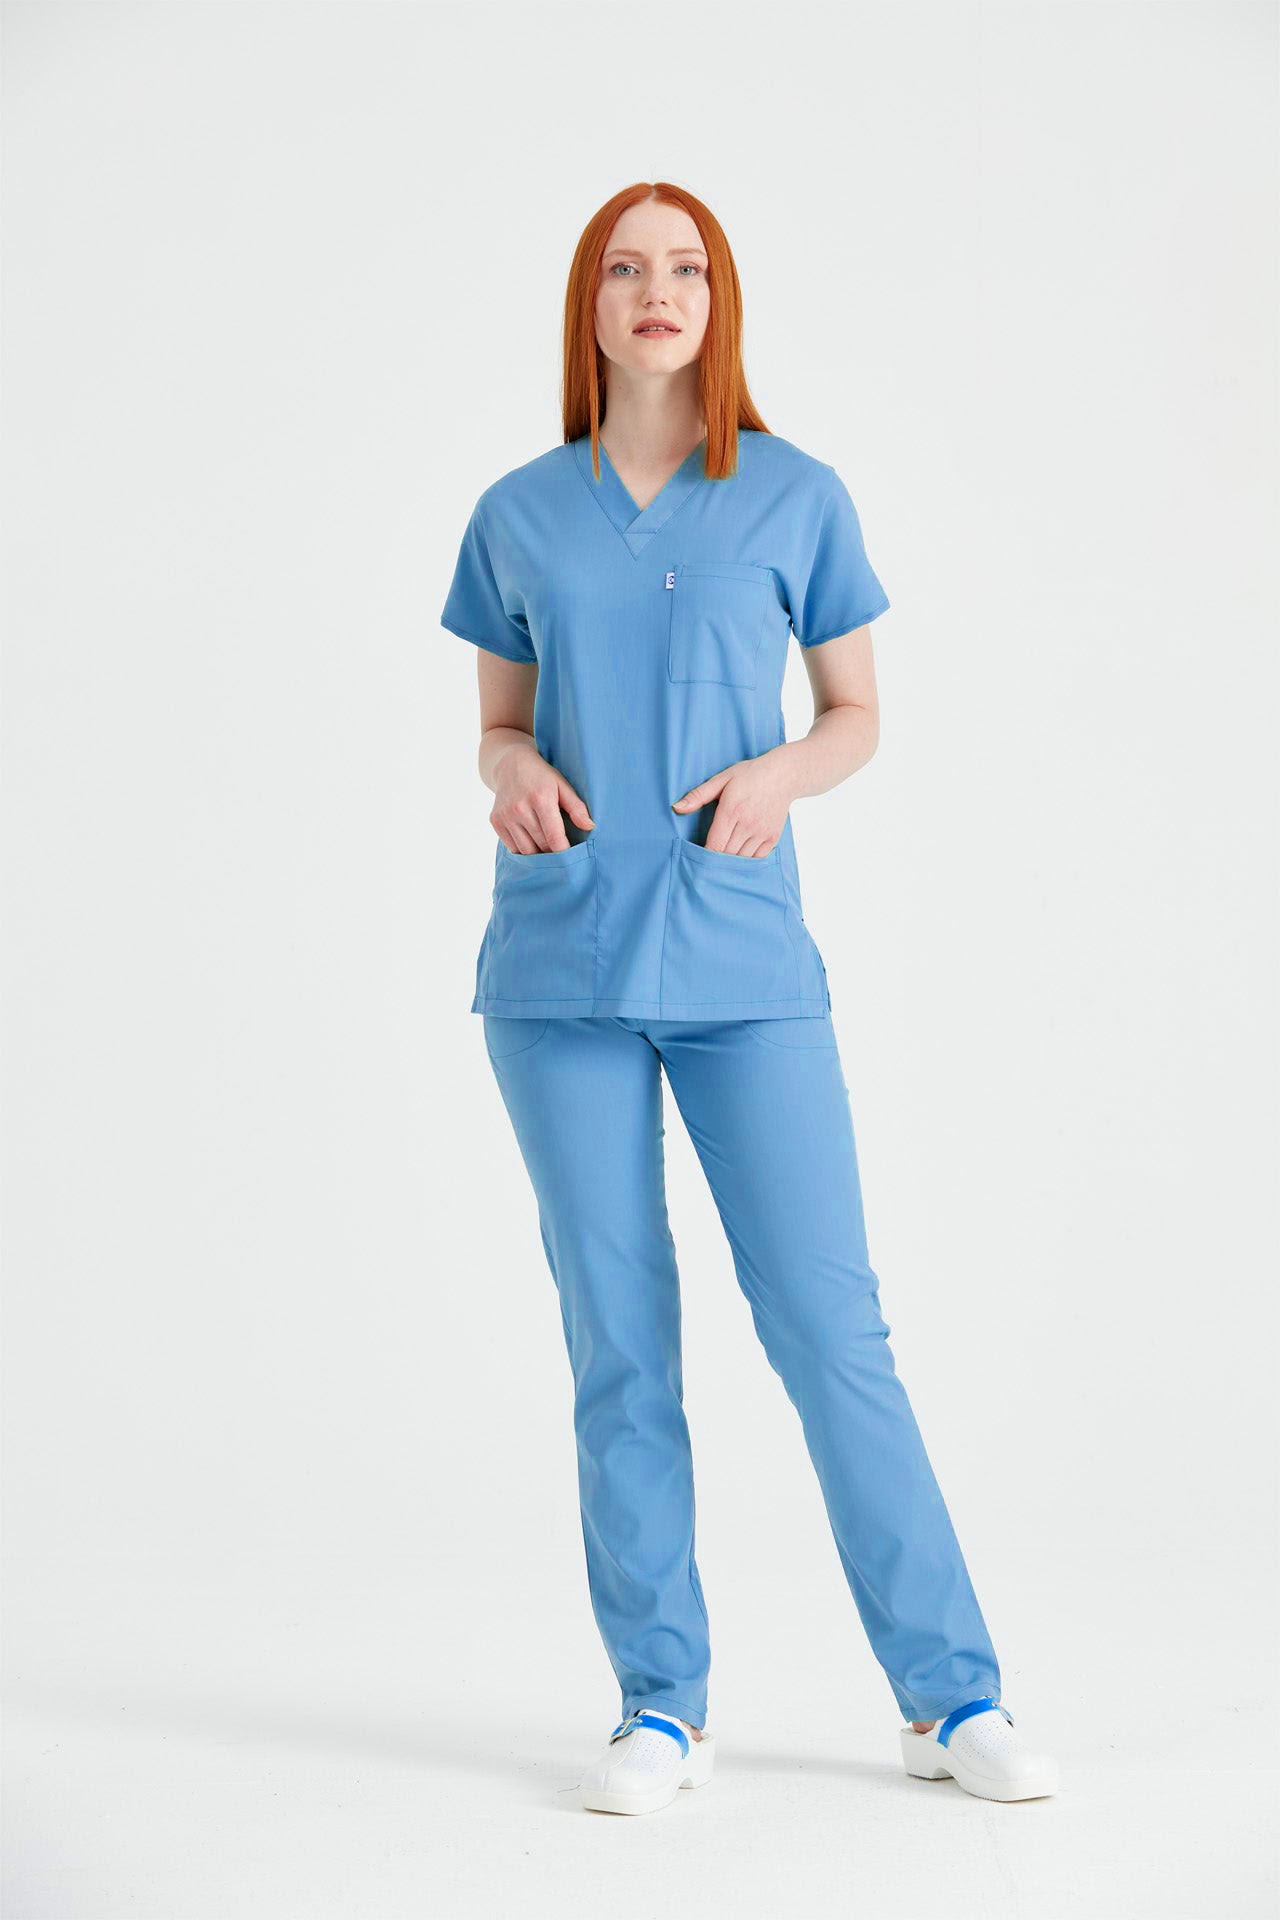 Asistenta medicala imbracata in costum medical de dama din elastan, albastru parlament, vedere din profil